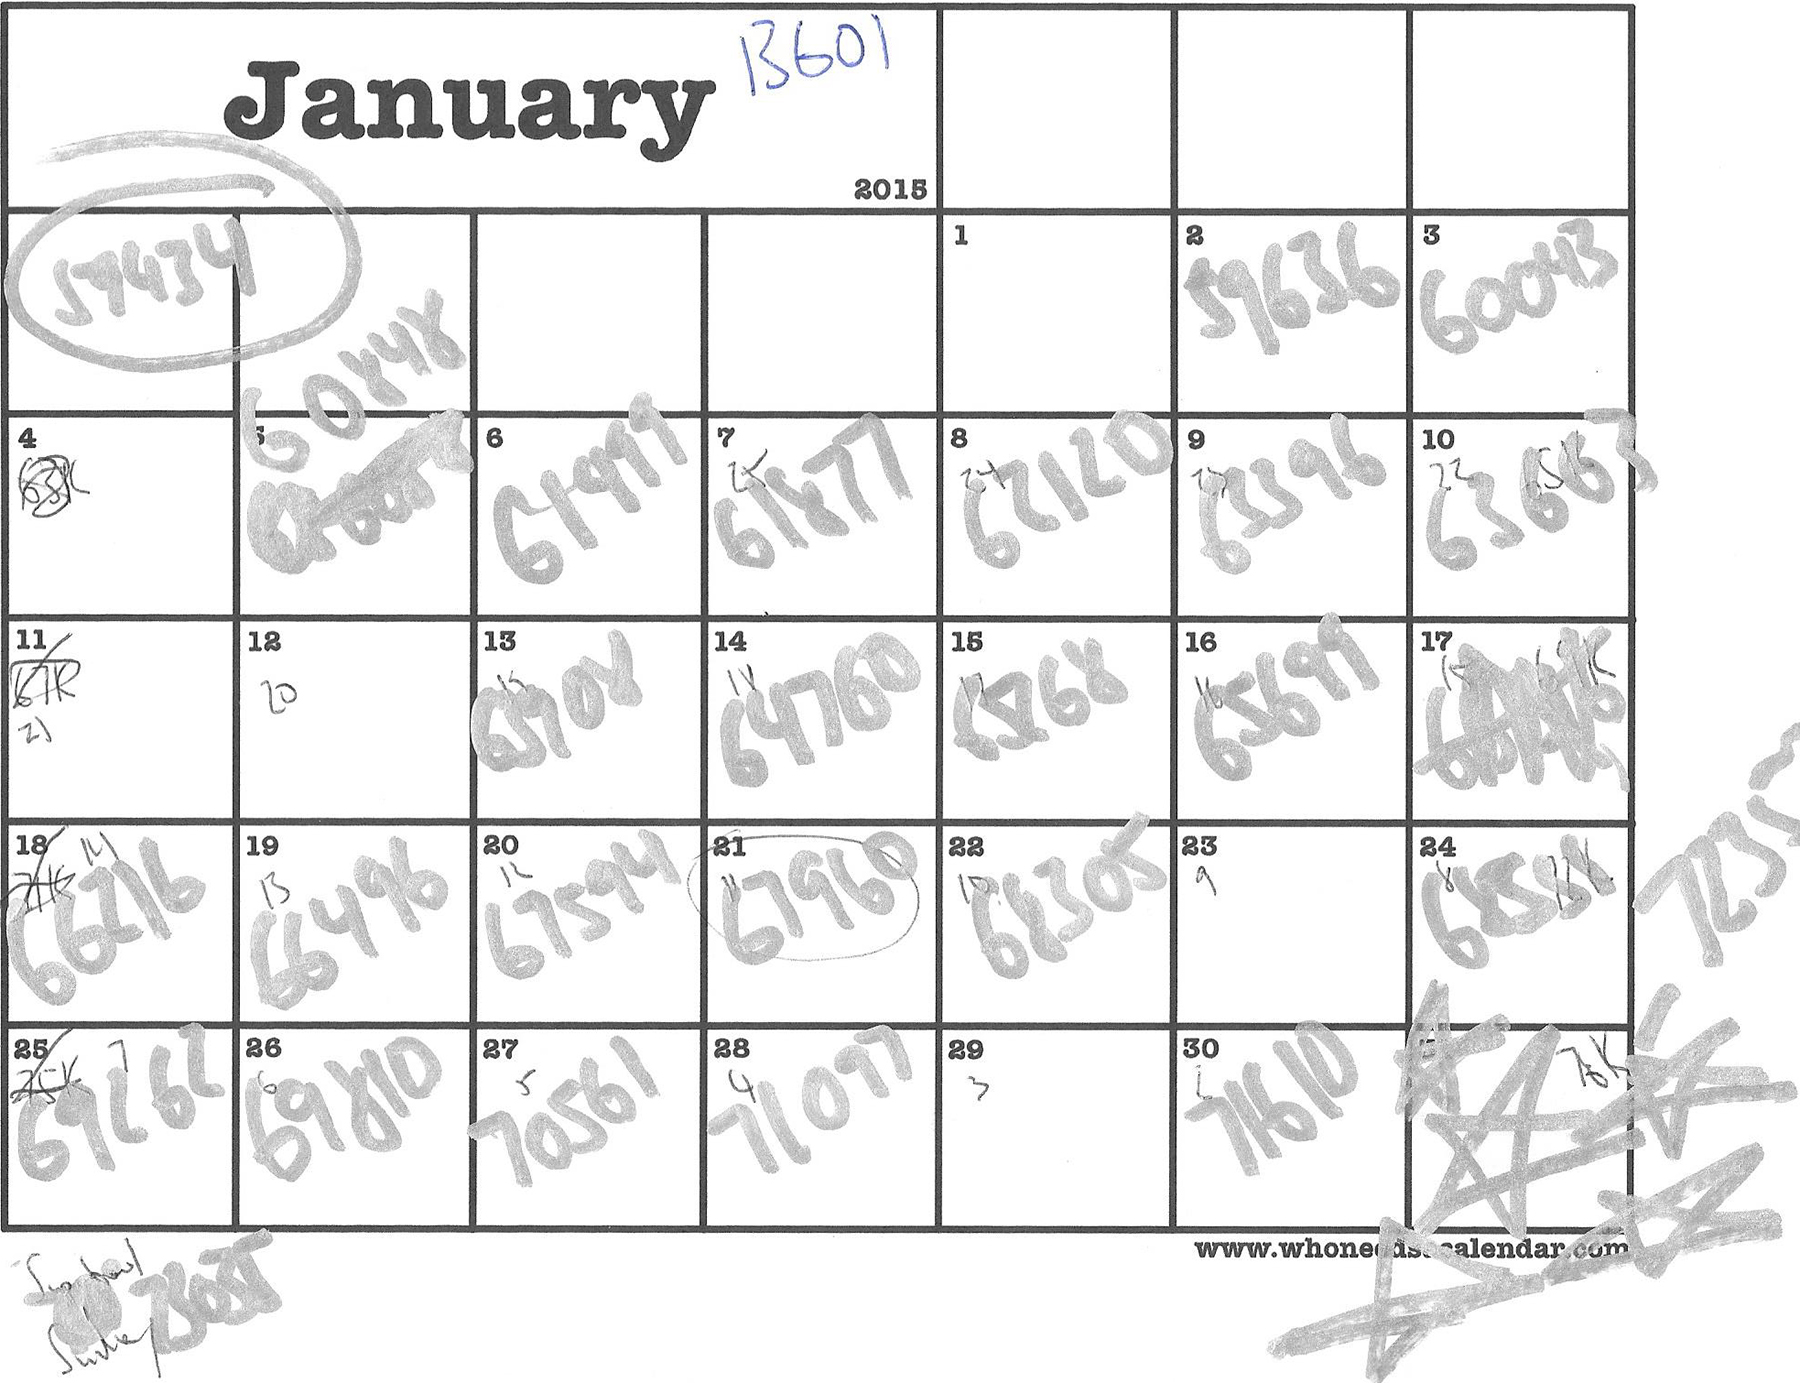 January 2015 Writing Progress, 71610 total words.